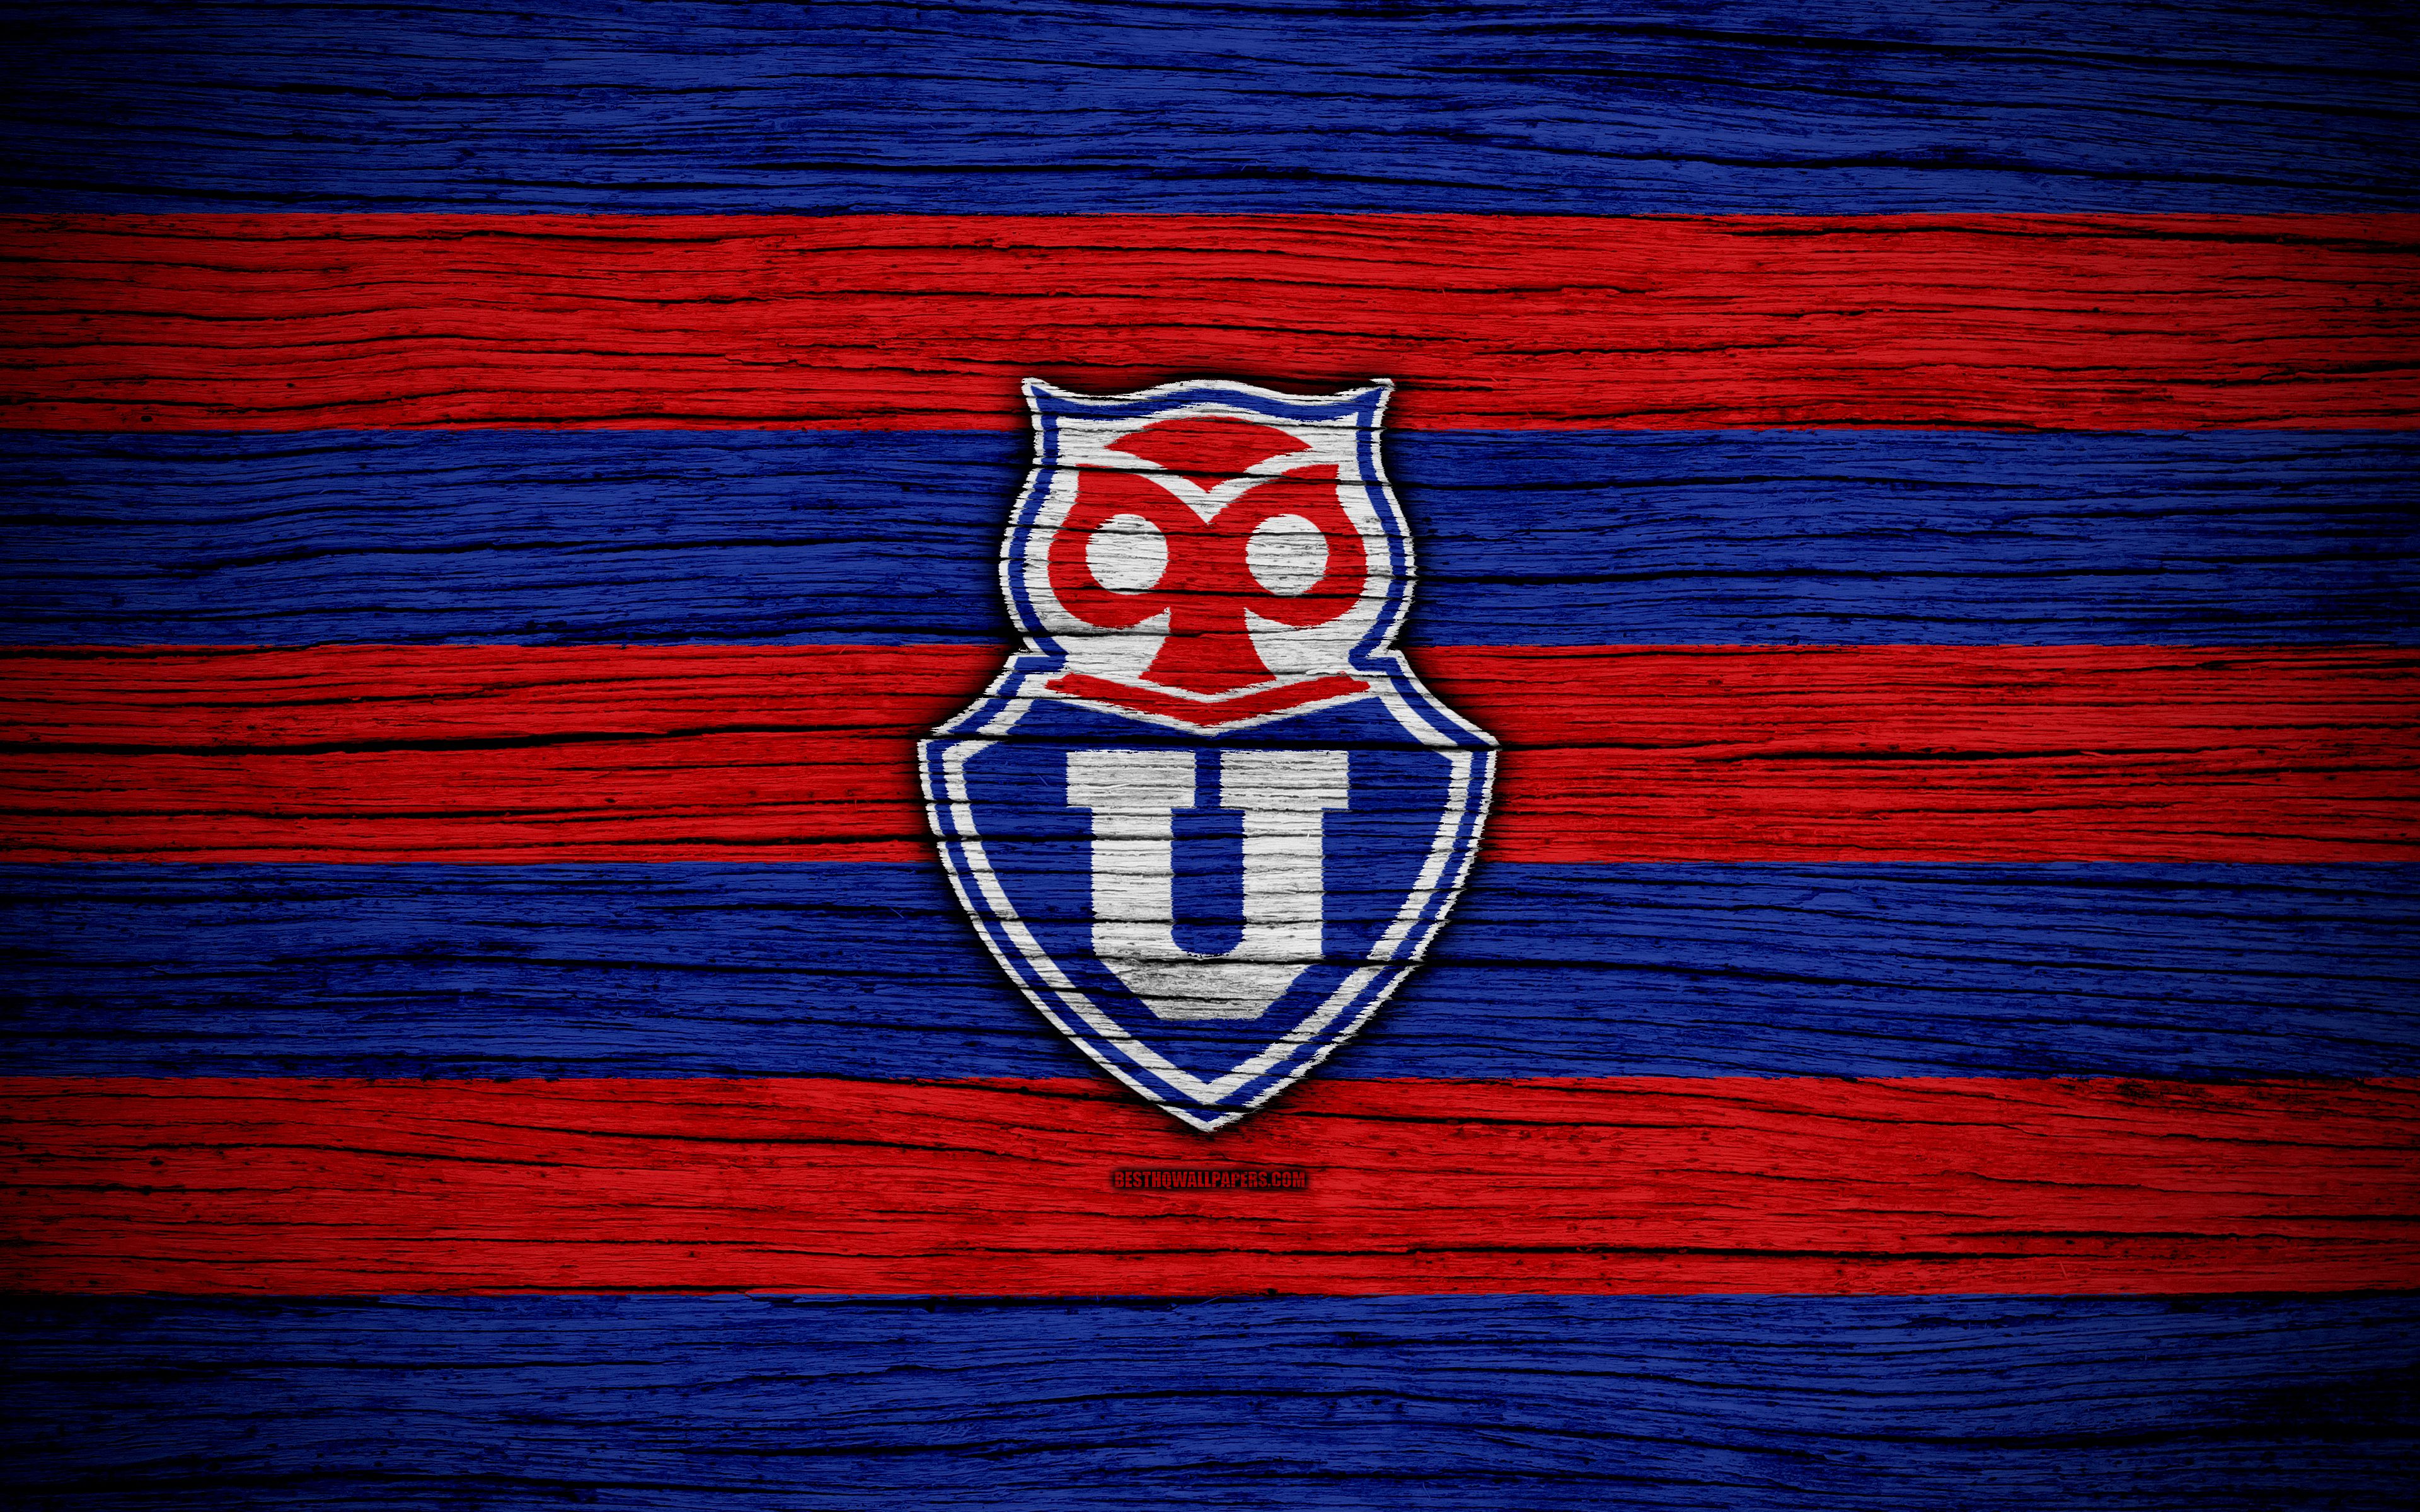 Download wallpaper Universidad de Chile FC, 4k, logo, Chilean